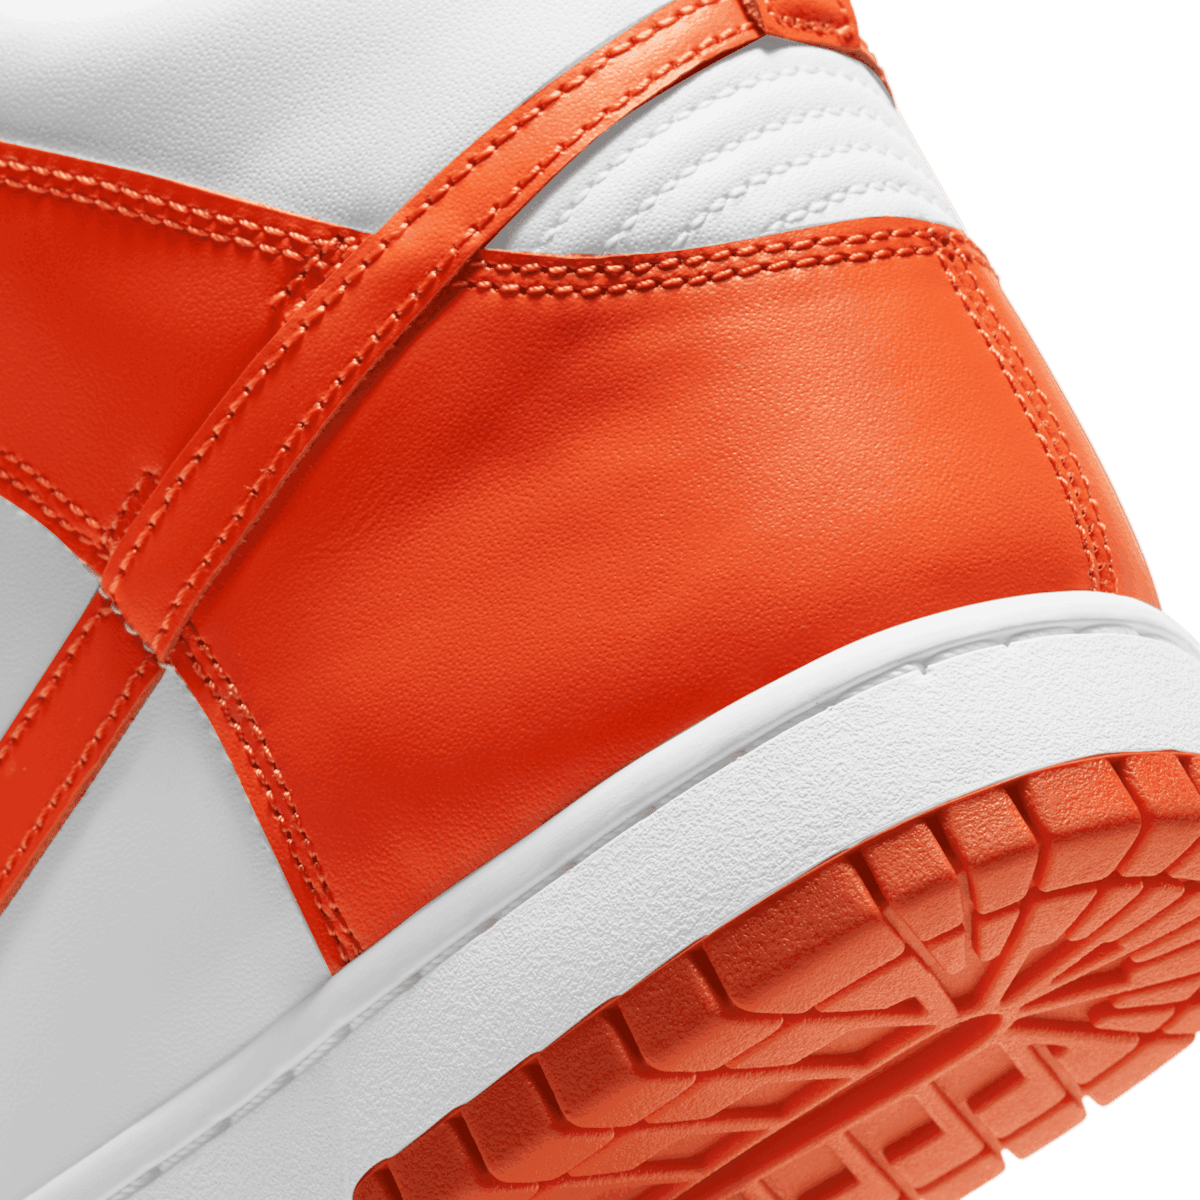 Nike Dunk High Syracuse - DD1399-101 Raffles and Release Date